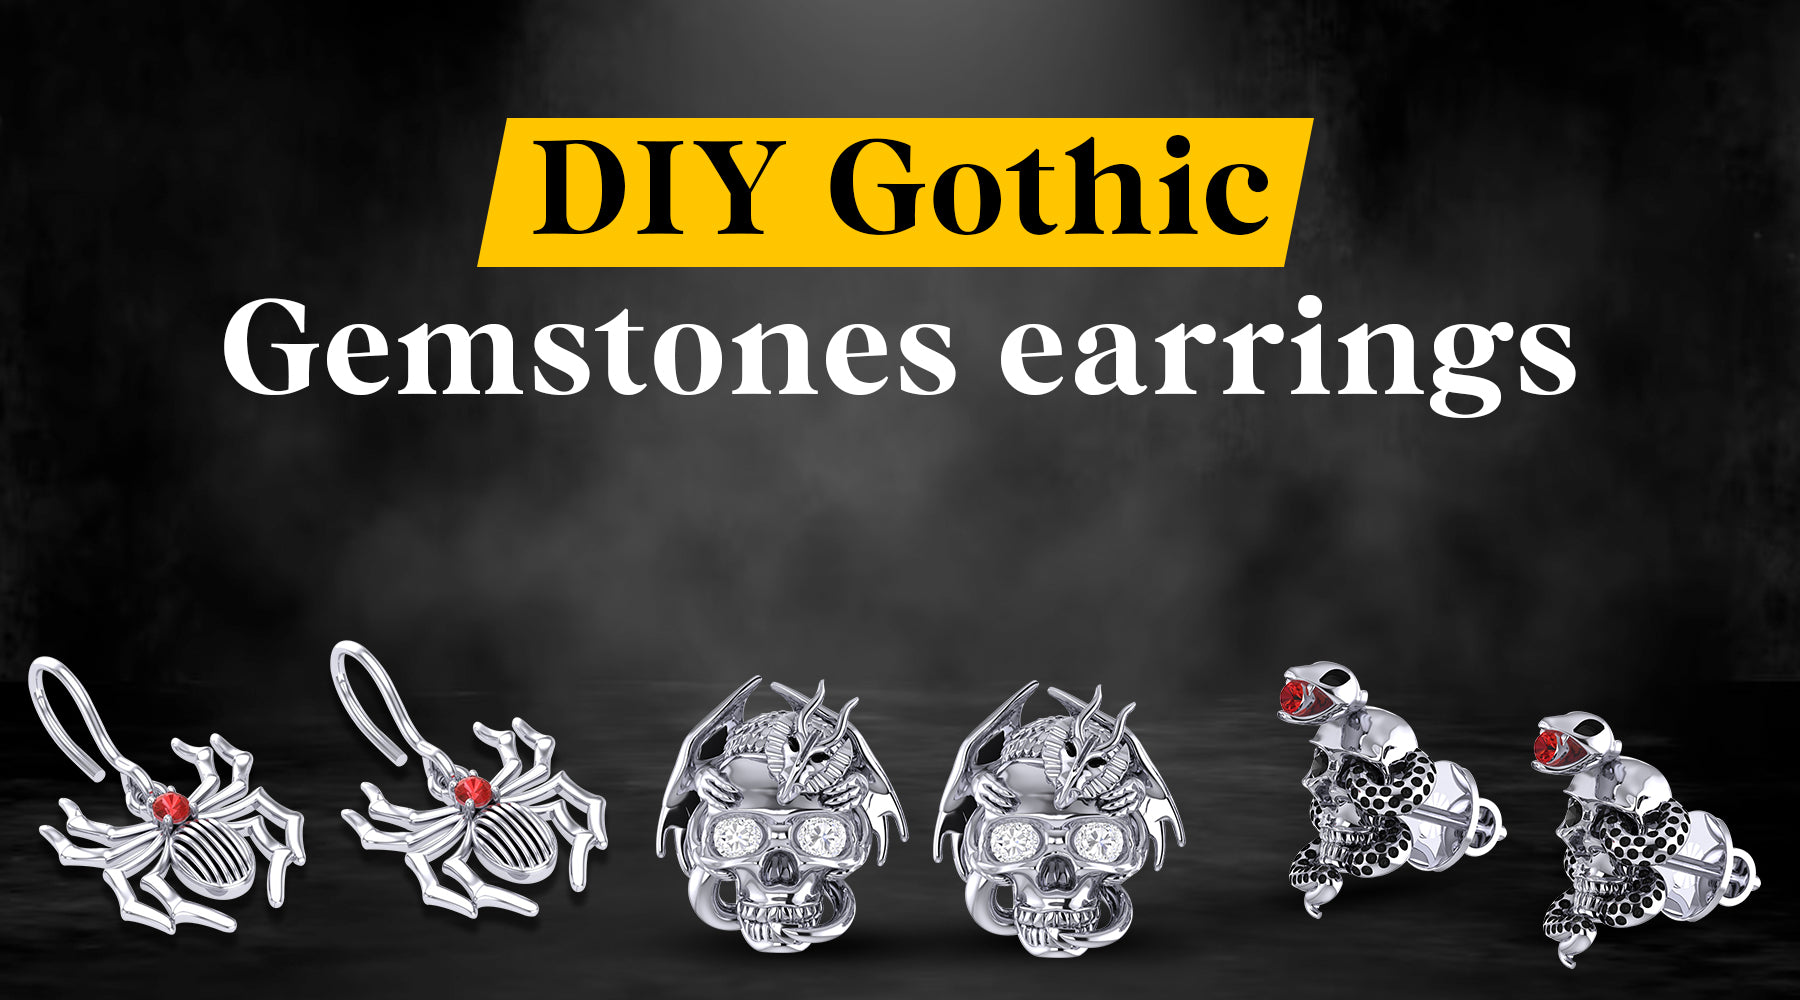 DIY Gothic Gemstone Earrings: A Beginner's Guide